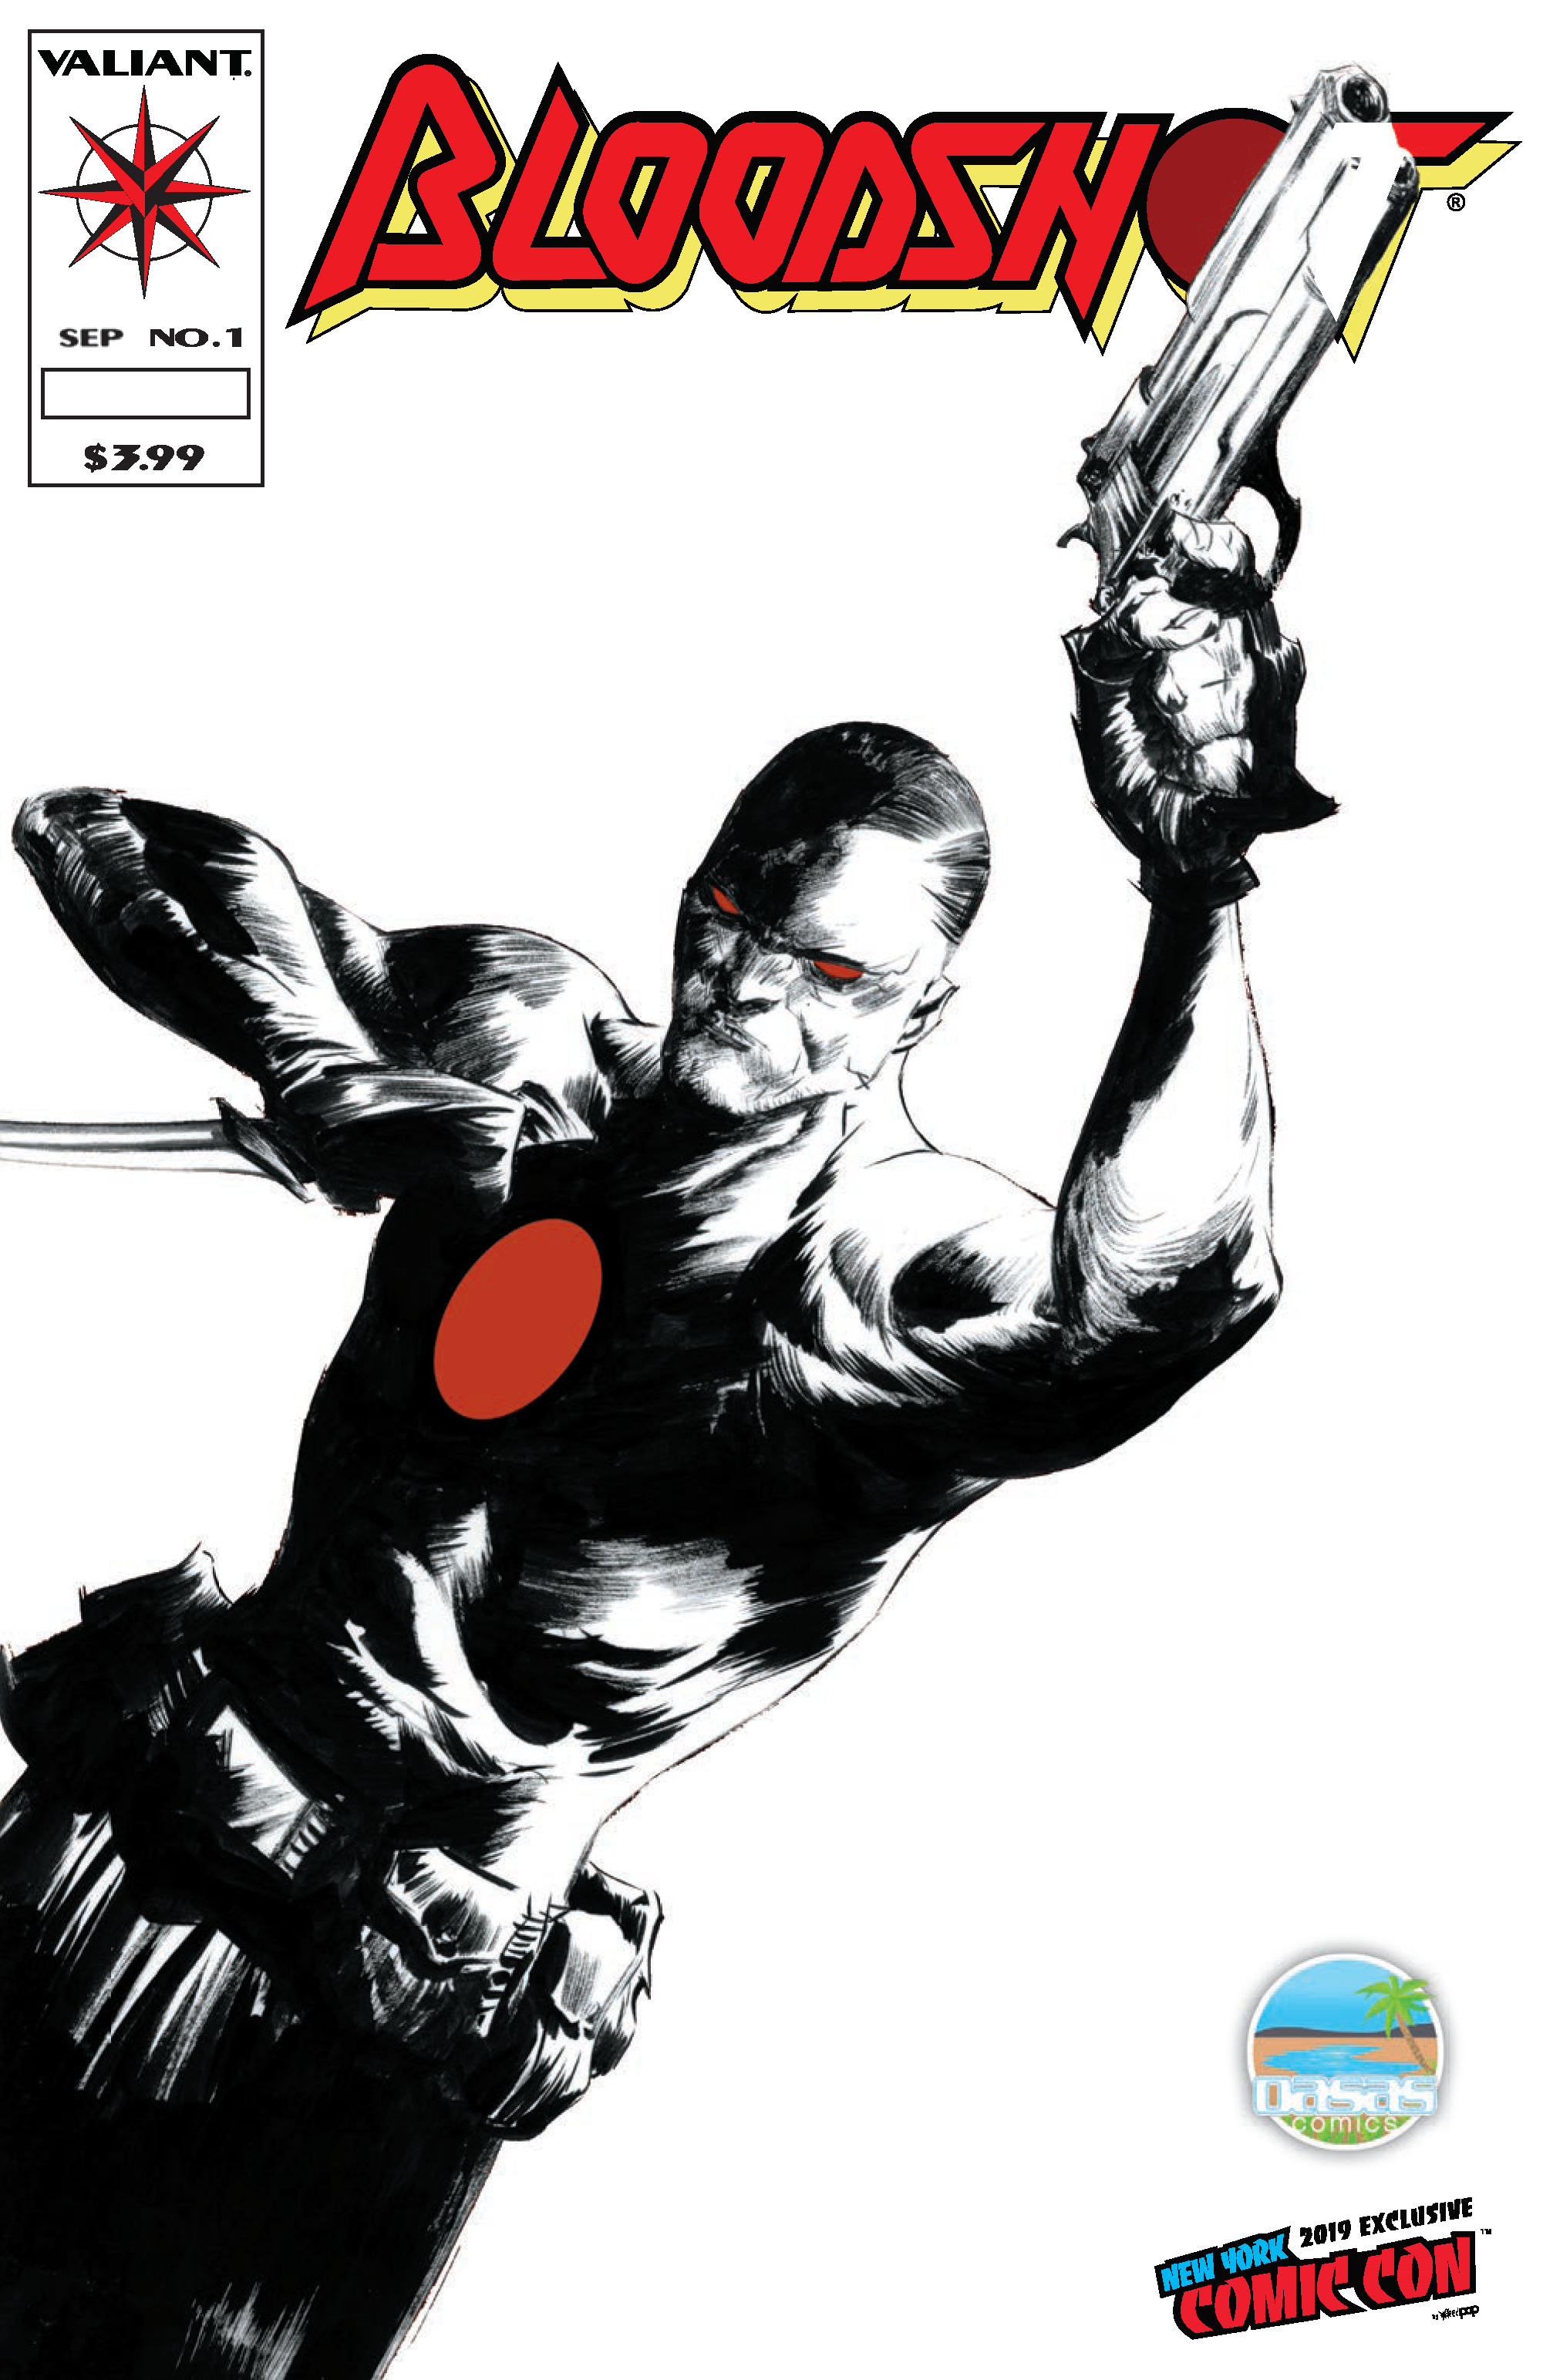 Bloodshot #1 OASAS Comics / NYCC 2019 Retro Tradedress Black and White Variant